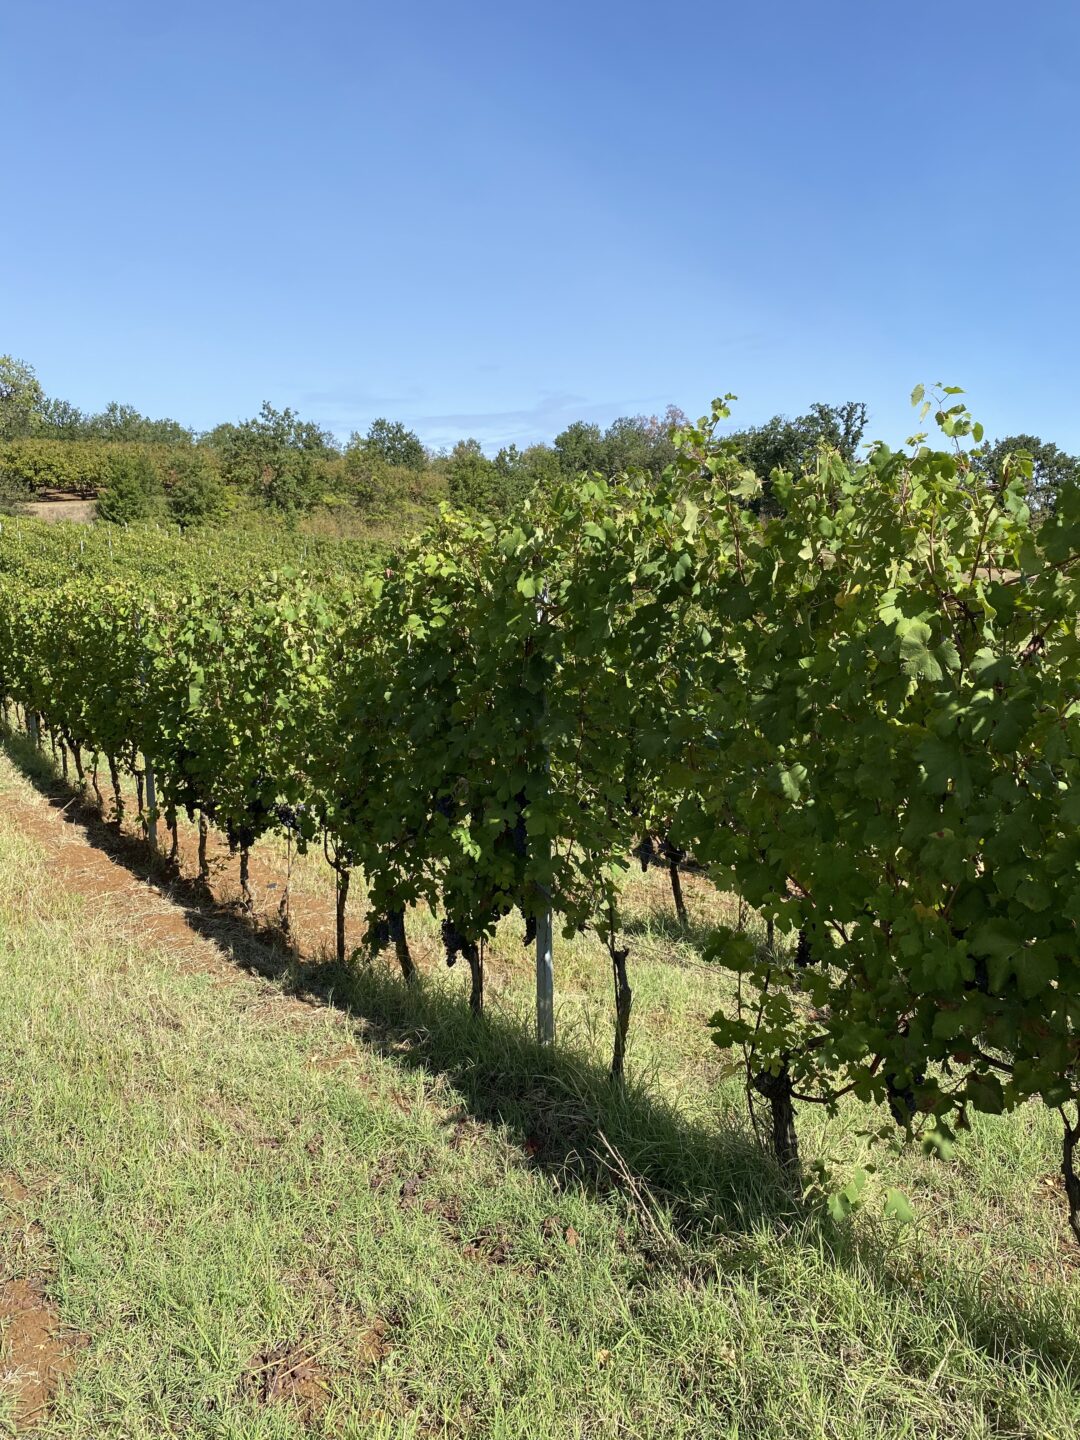 Rows of vine